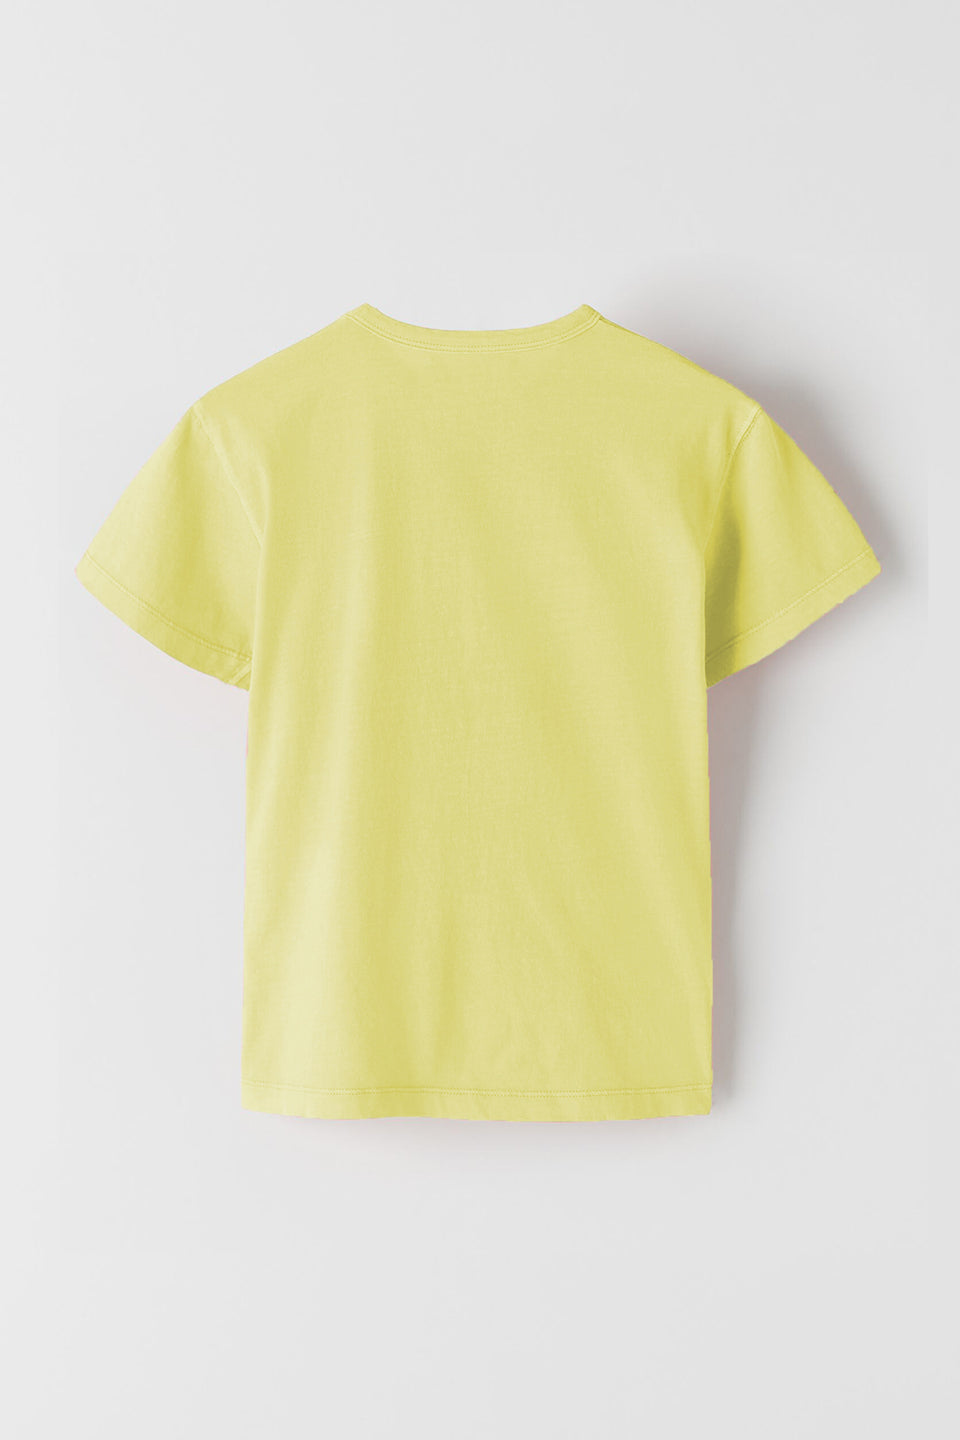 light yellow t shirt ladies